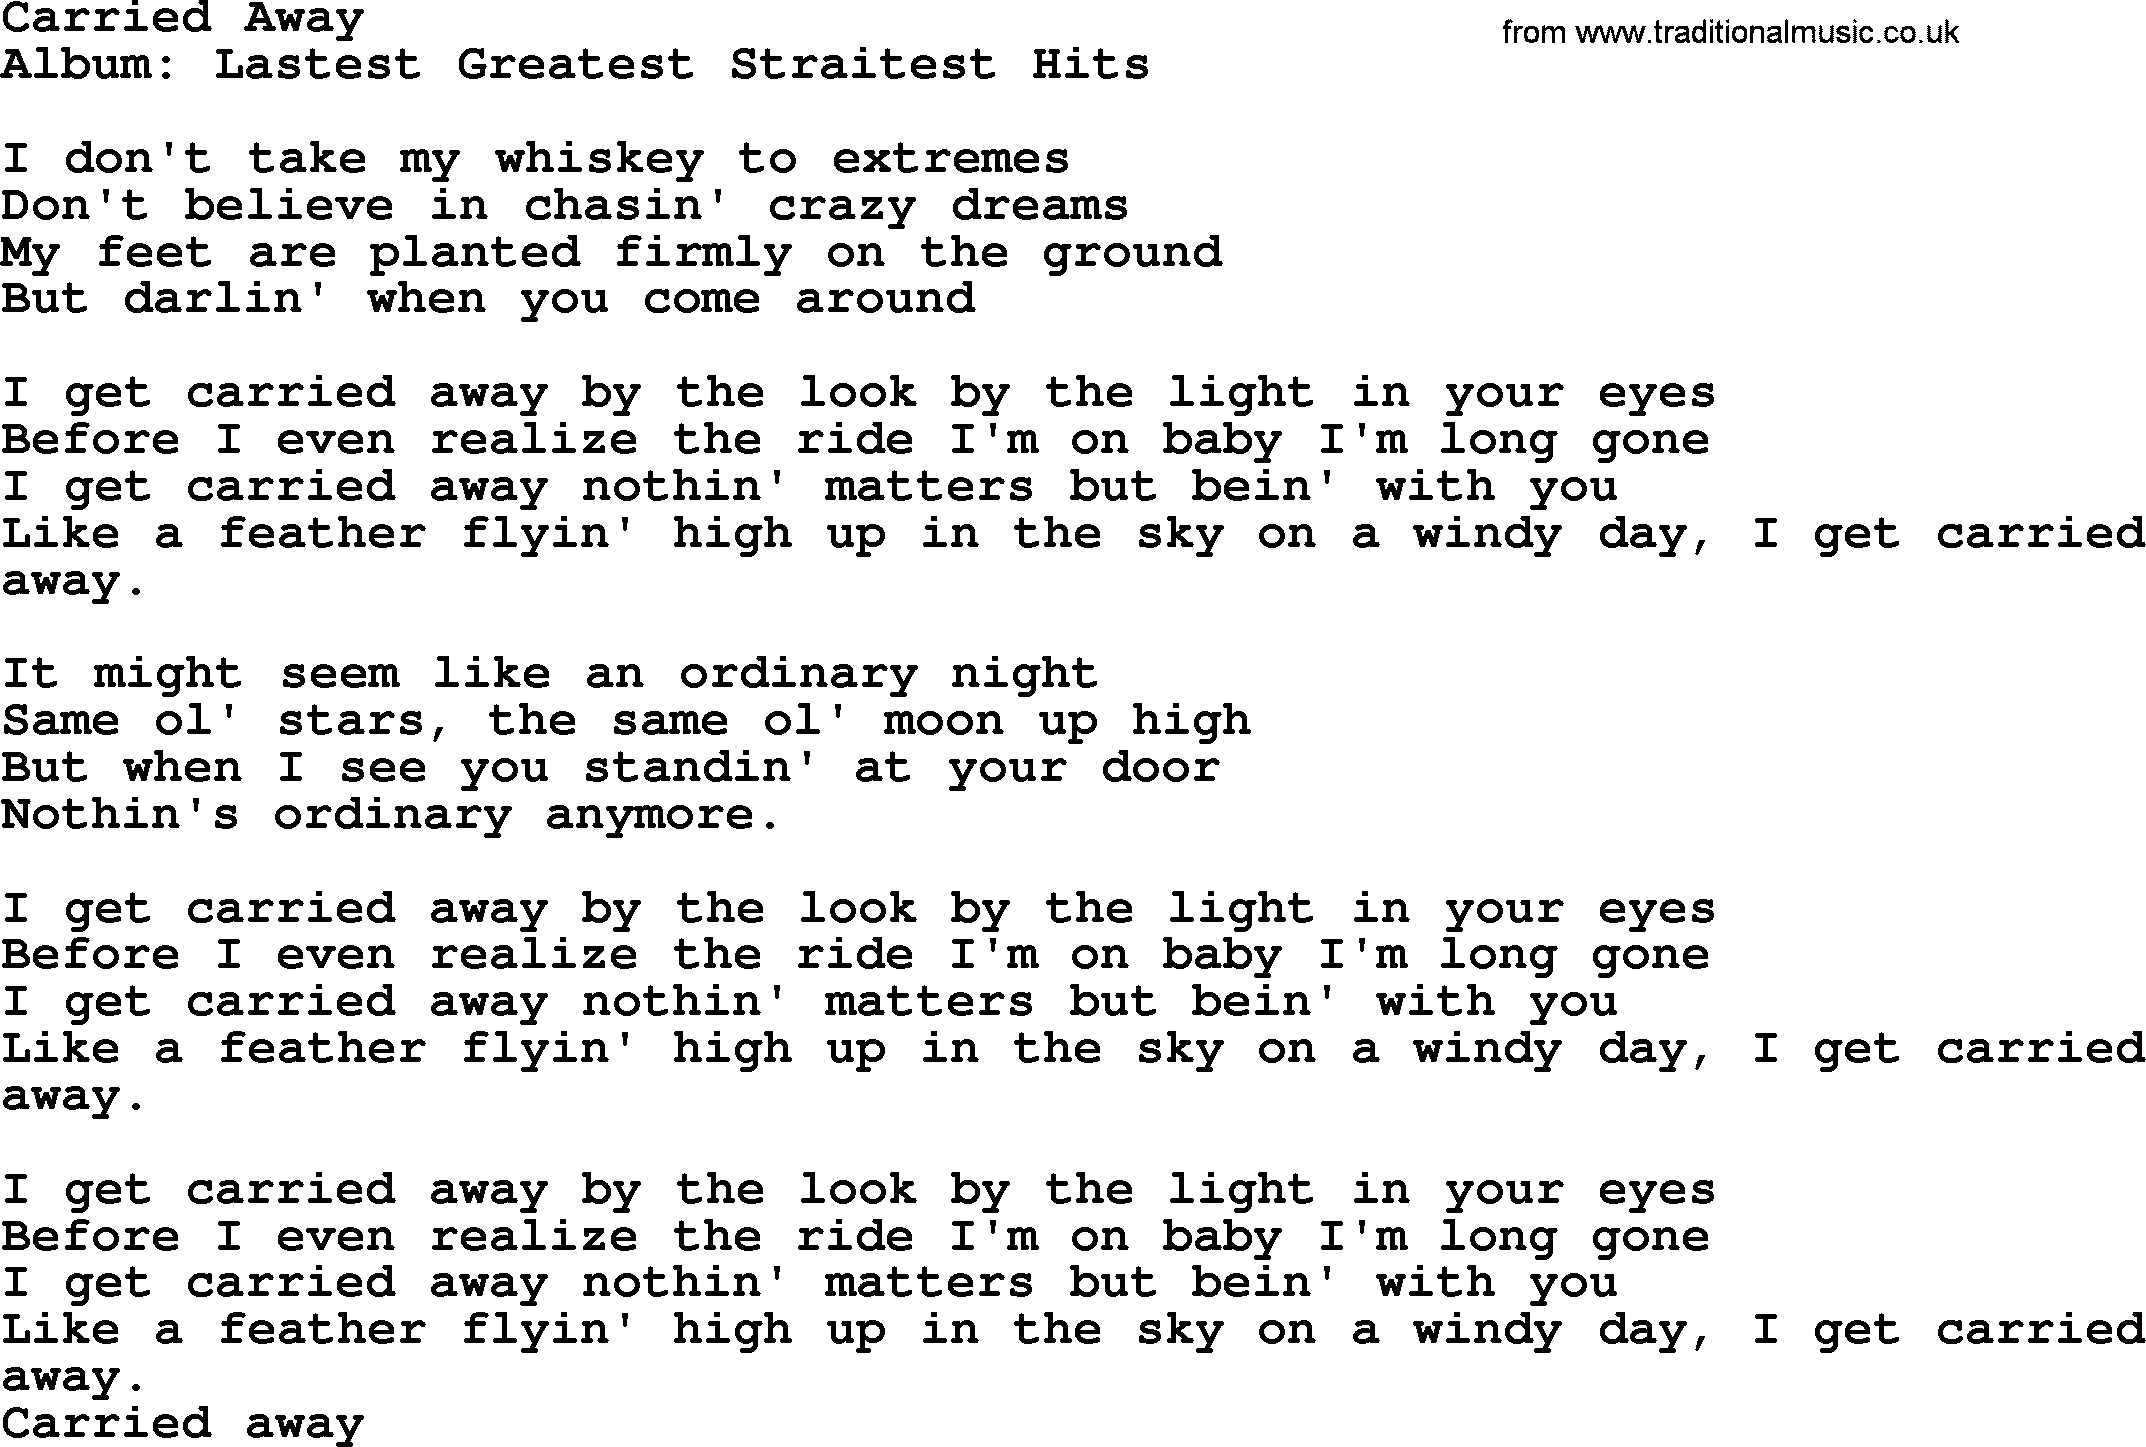 George Strait song: Carried Away, lyrics